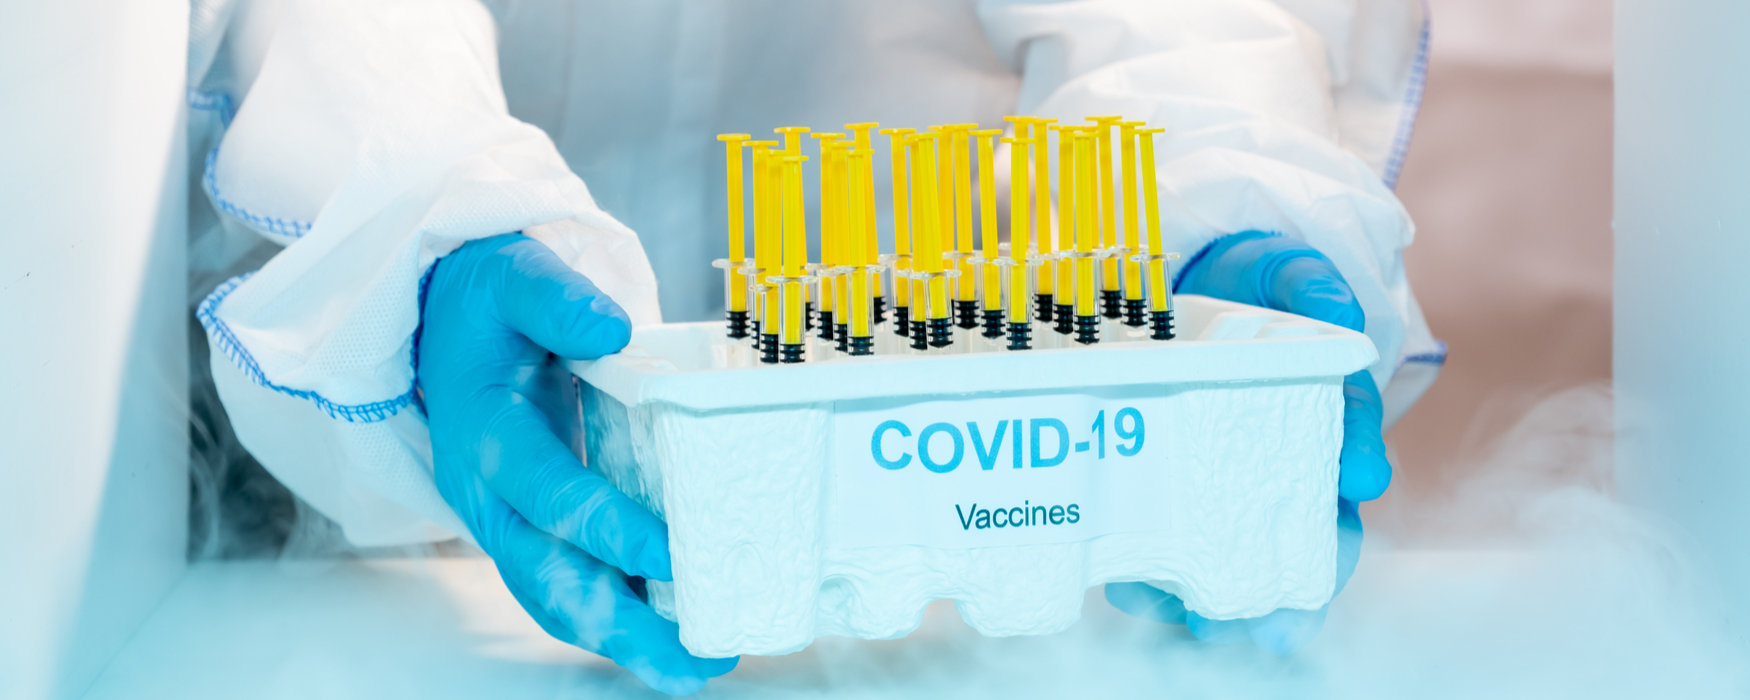 D.C. covid vaccine freezers - covid 19 vaccine freezer - vaccine storage in D.C.